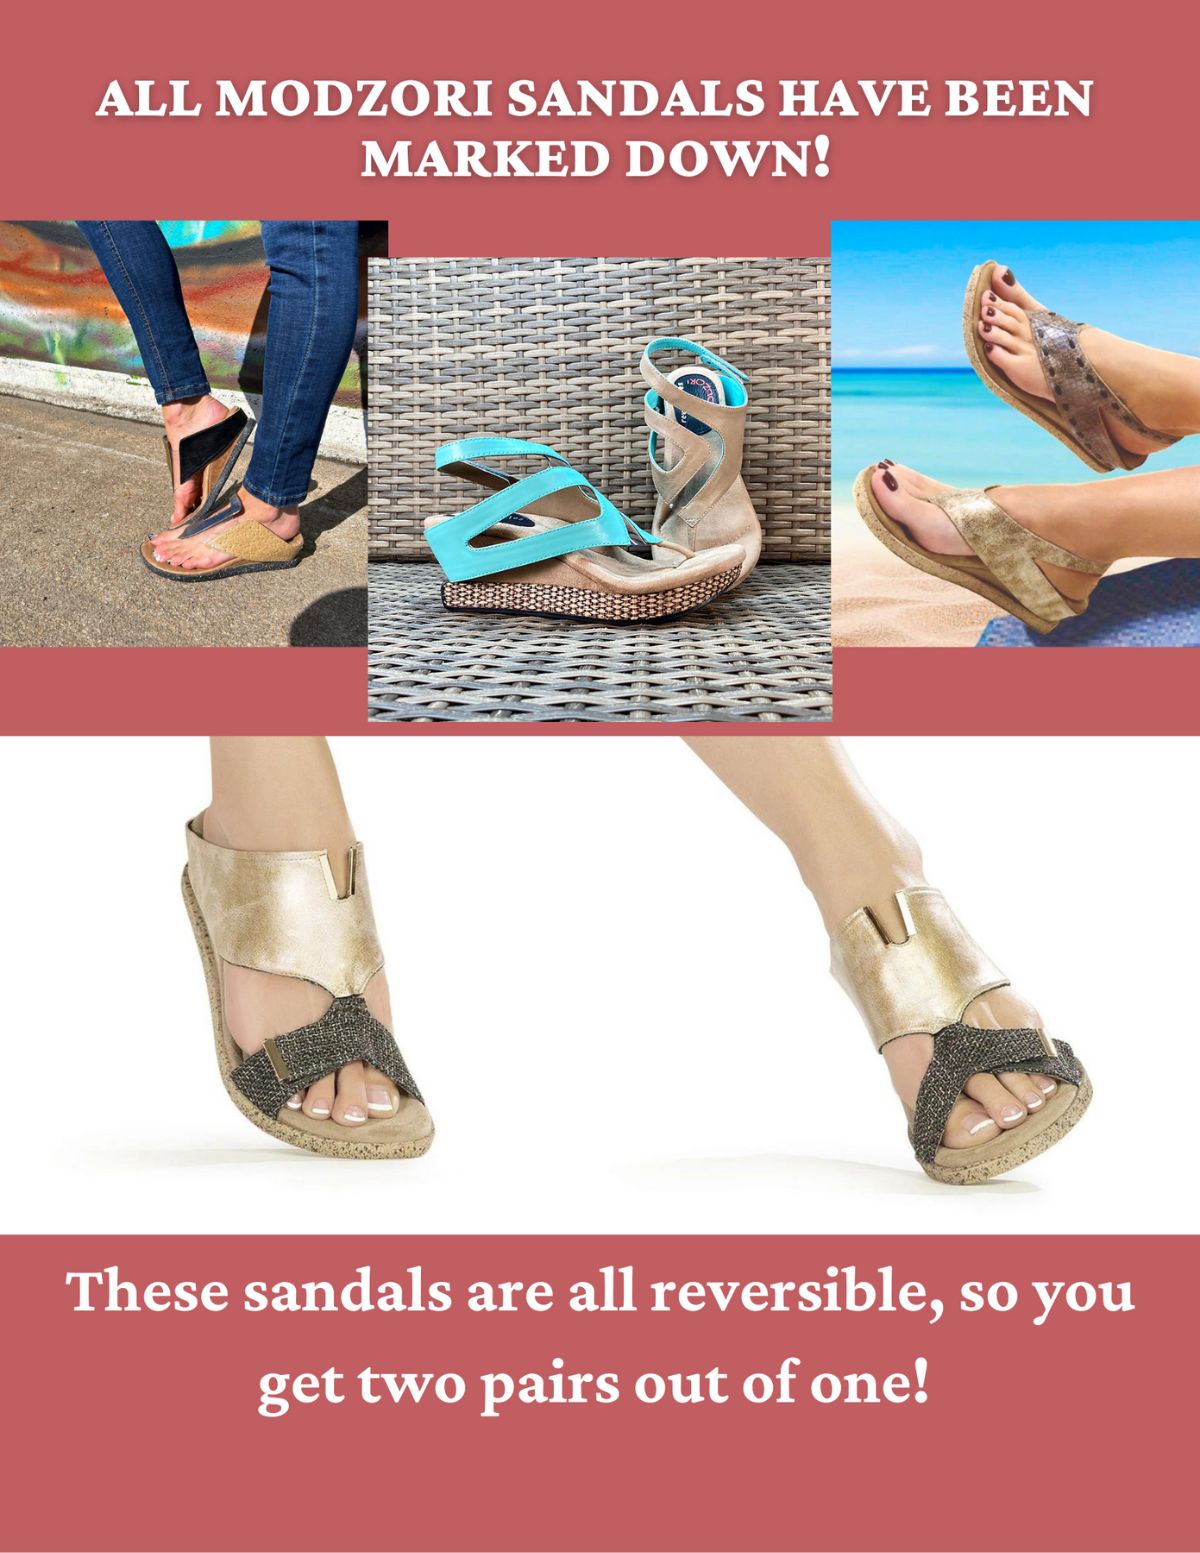 Modzori Sandals on sale